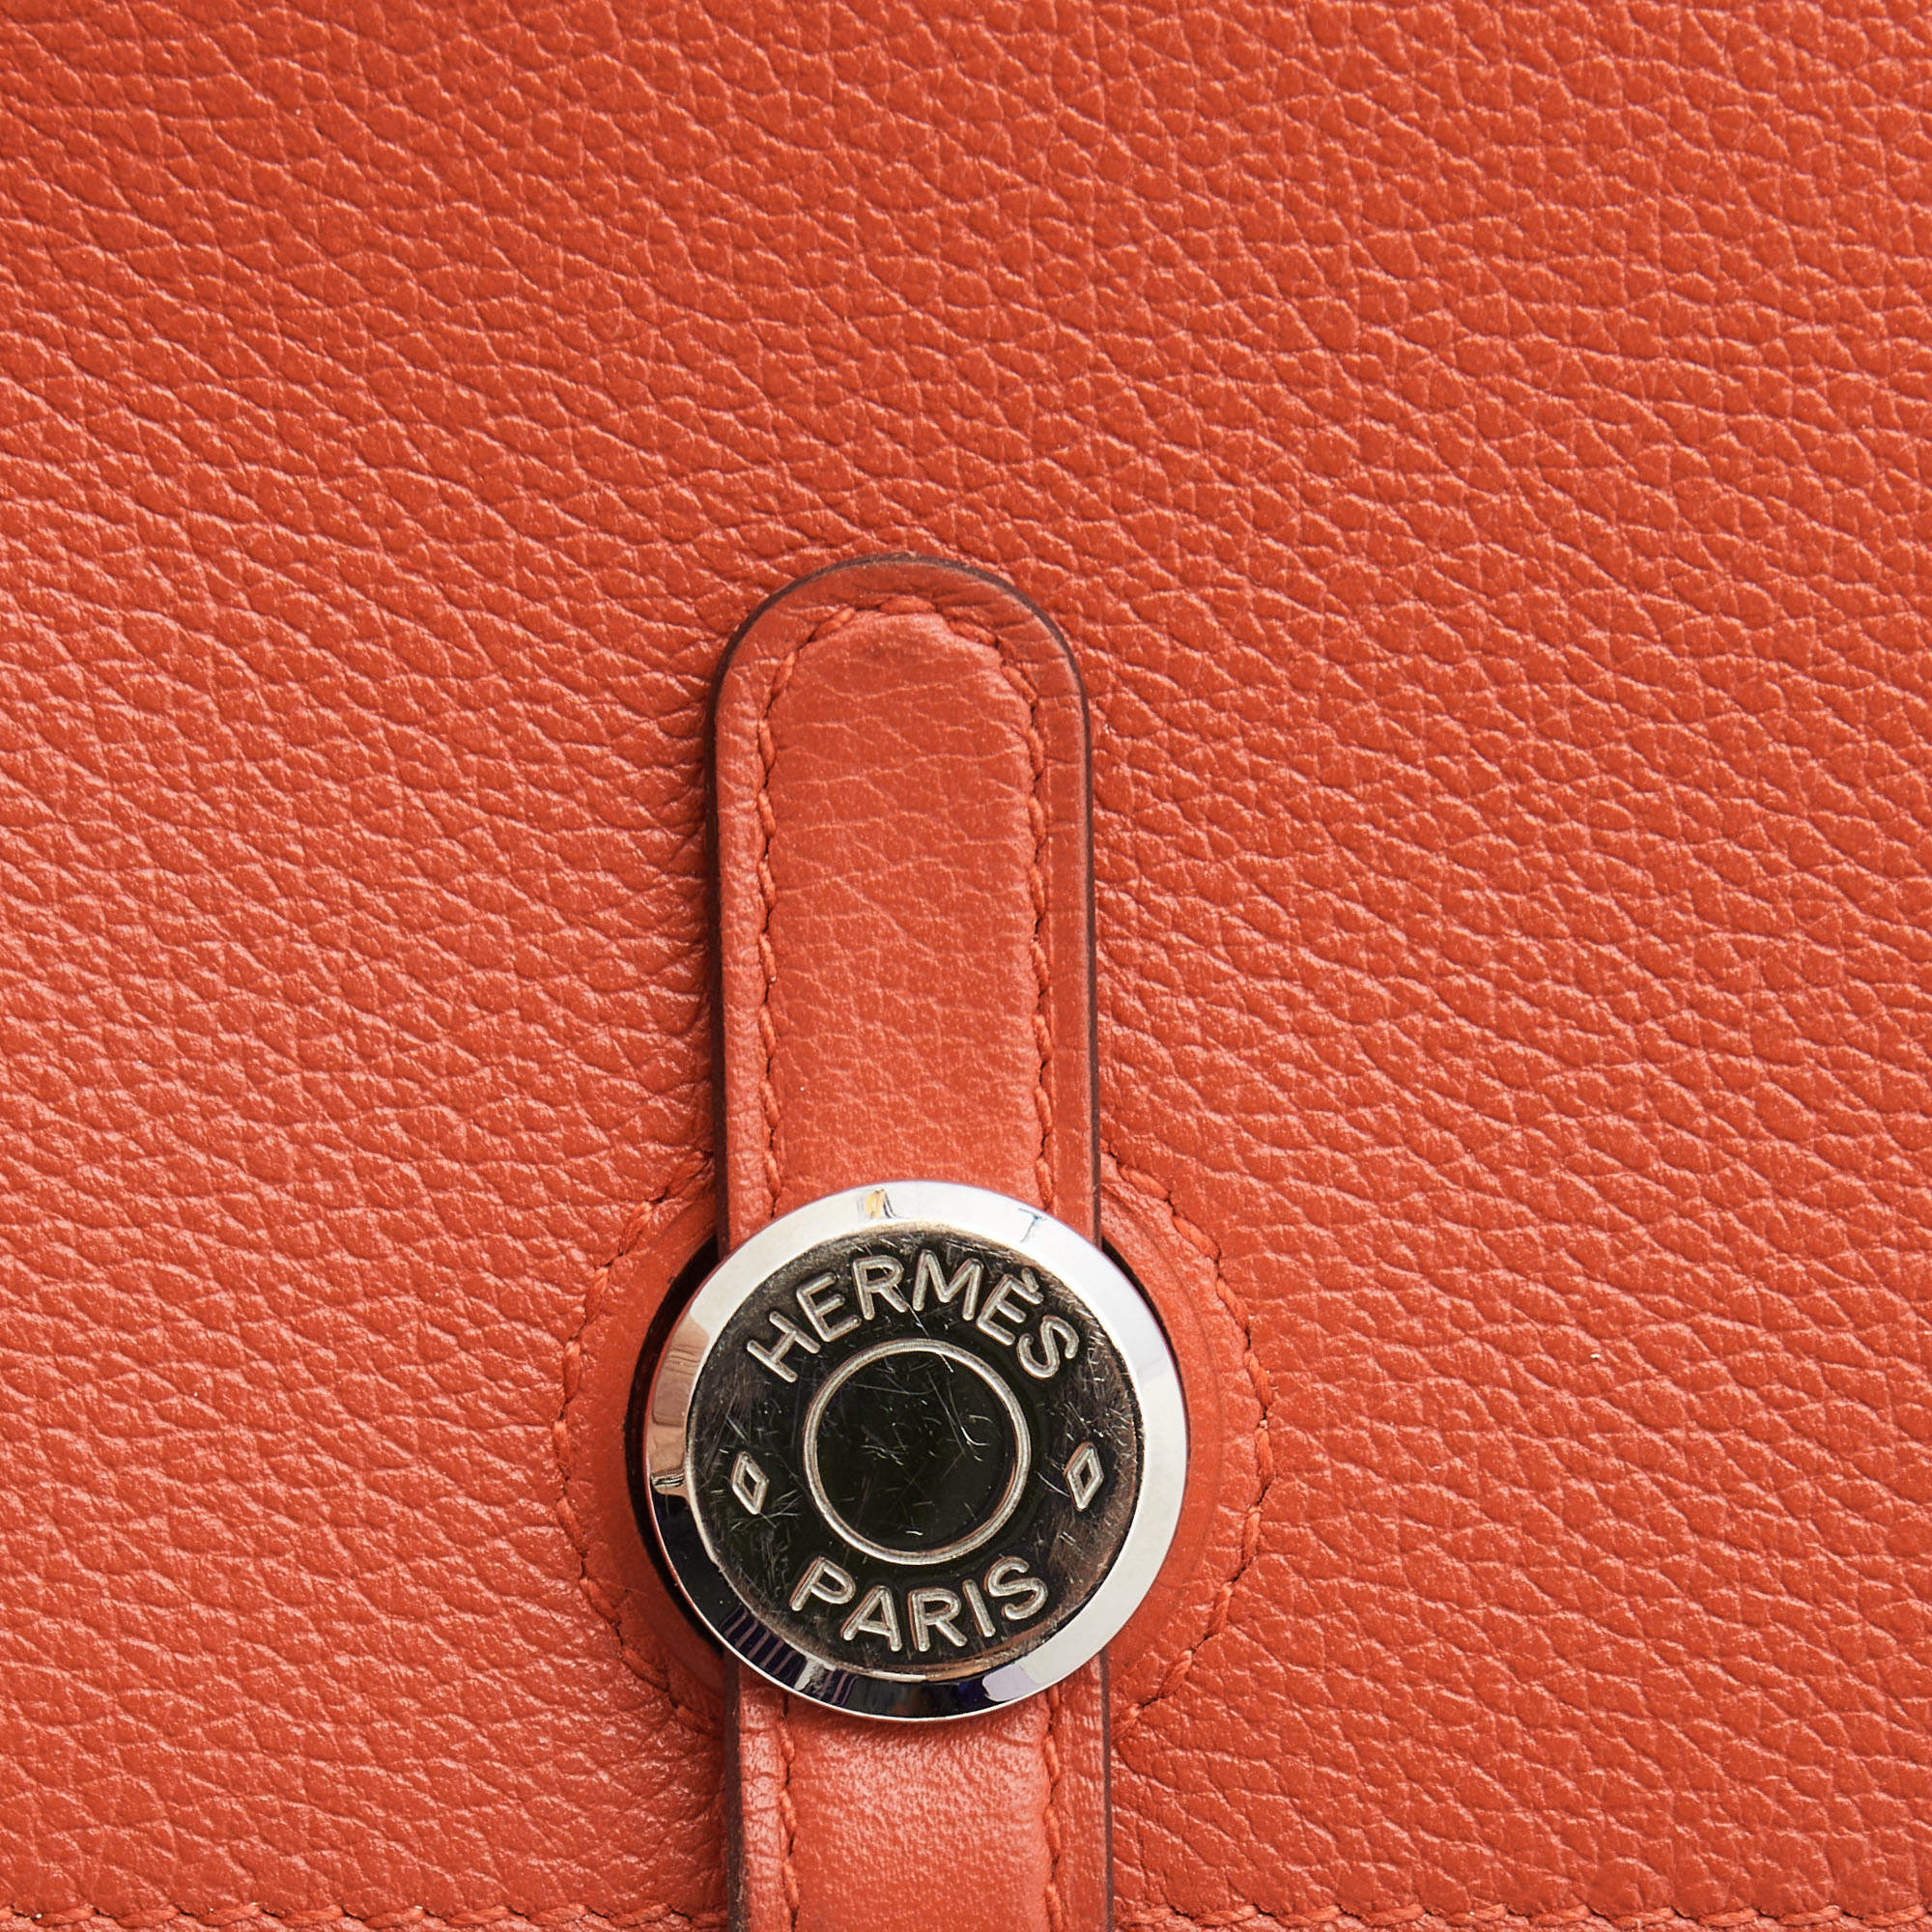 Hermès 2020 Dogon Compact Wallet - Blue Wallets, Accessories